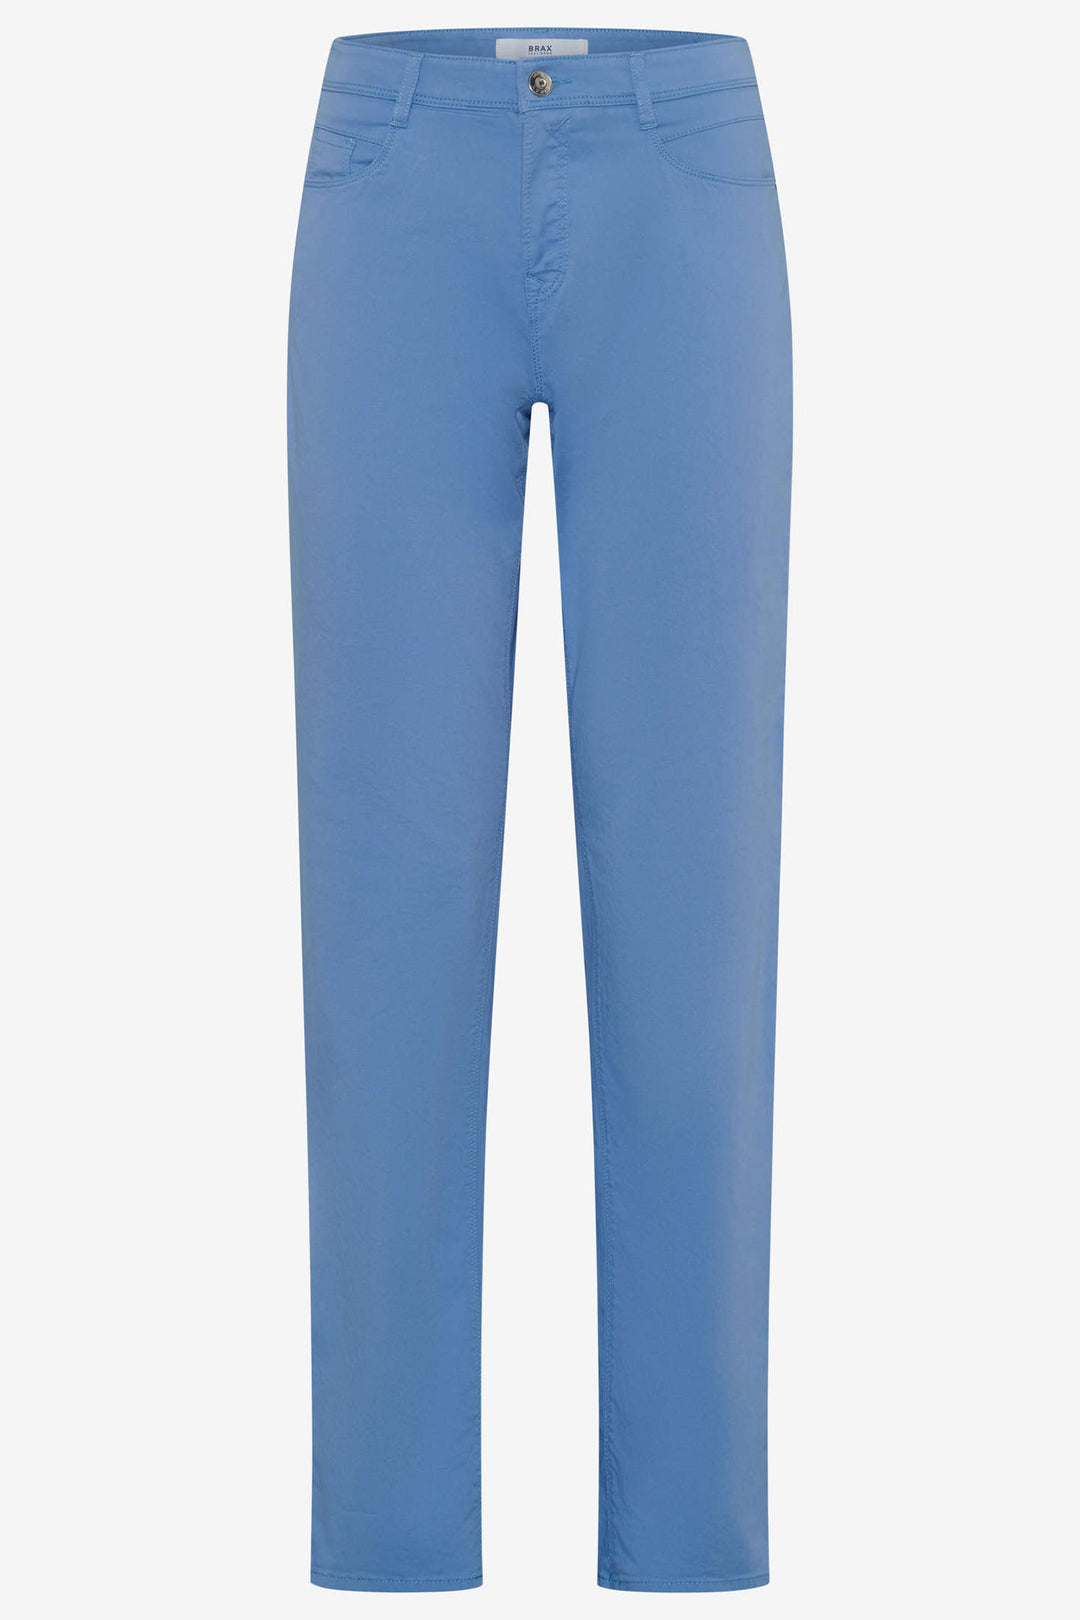 Brax Carola 71-1458 09859520 28 Santorin Blue Five Pocket Jeans - Shirley Allum Boutique